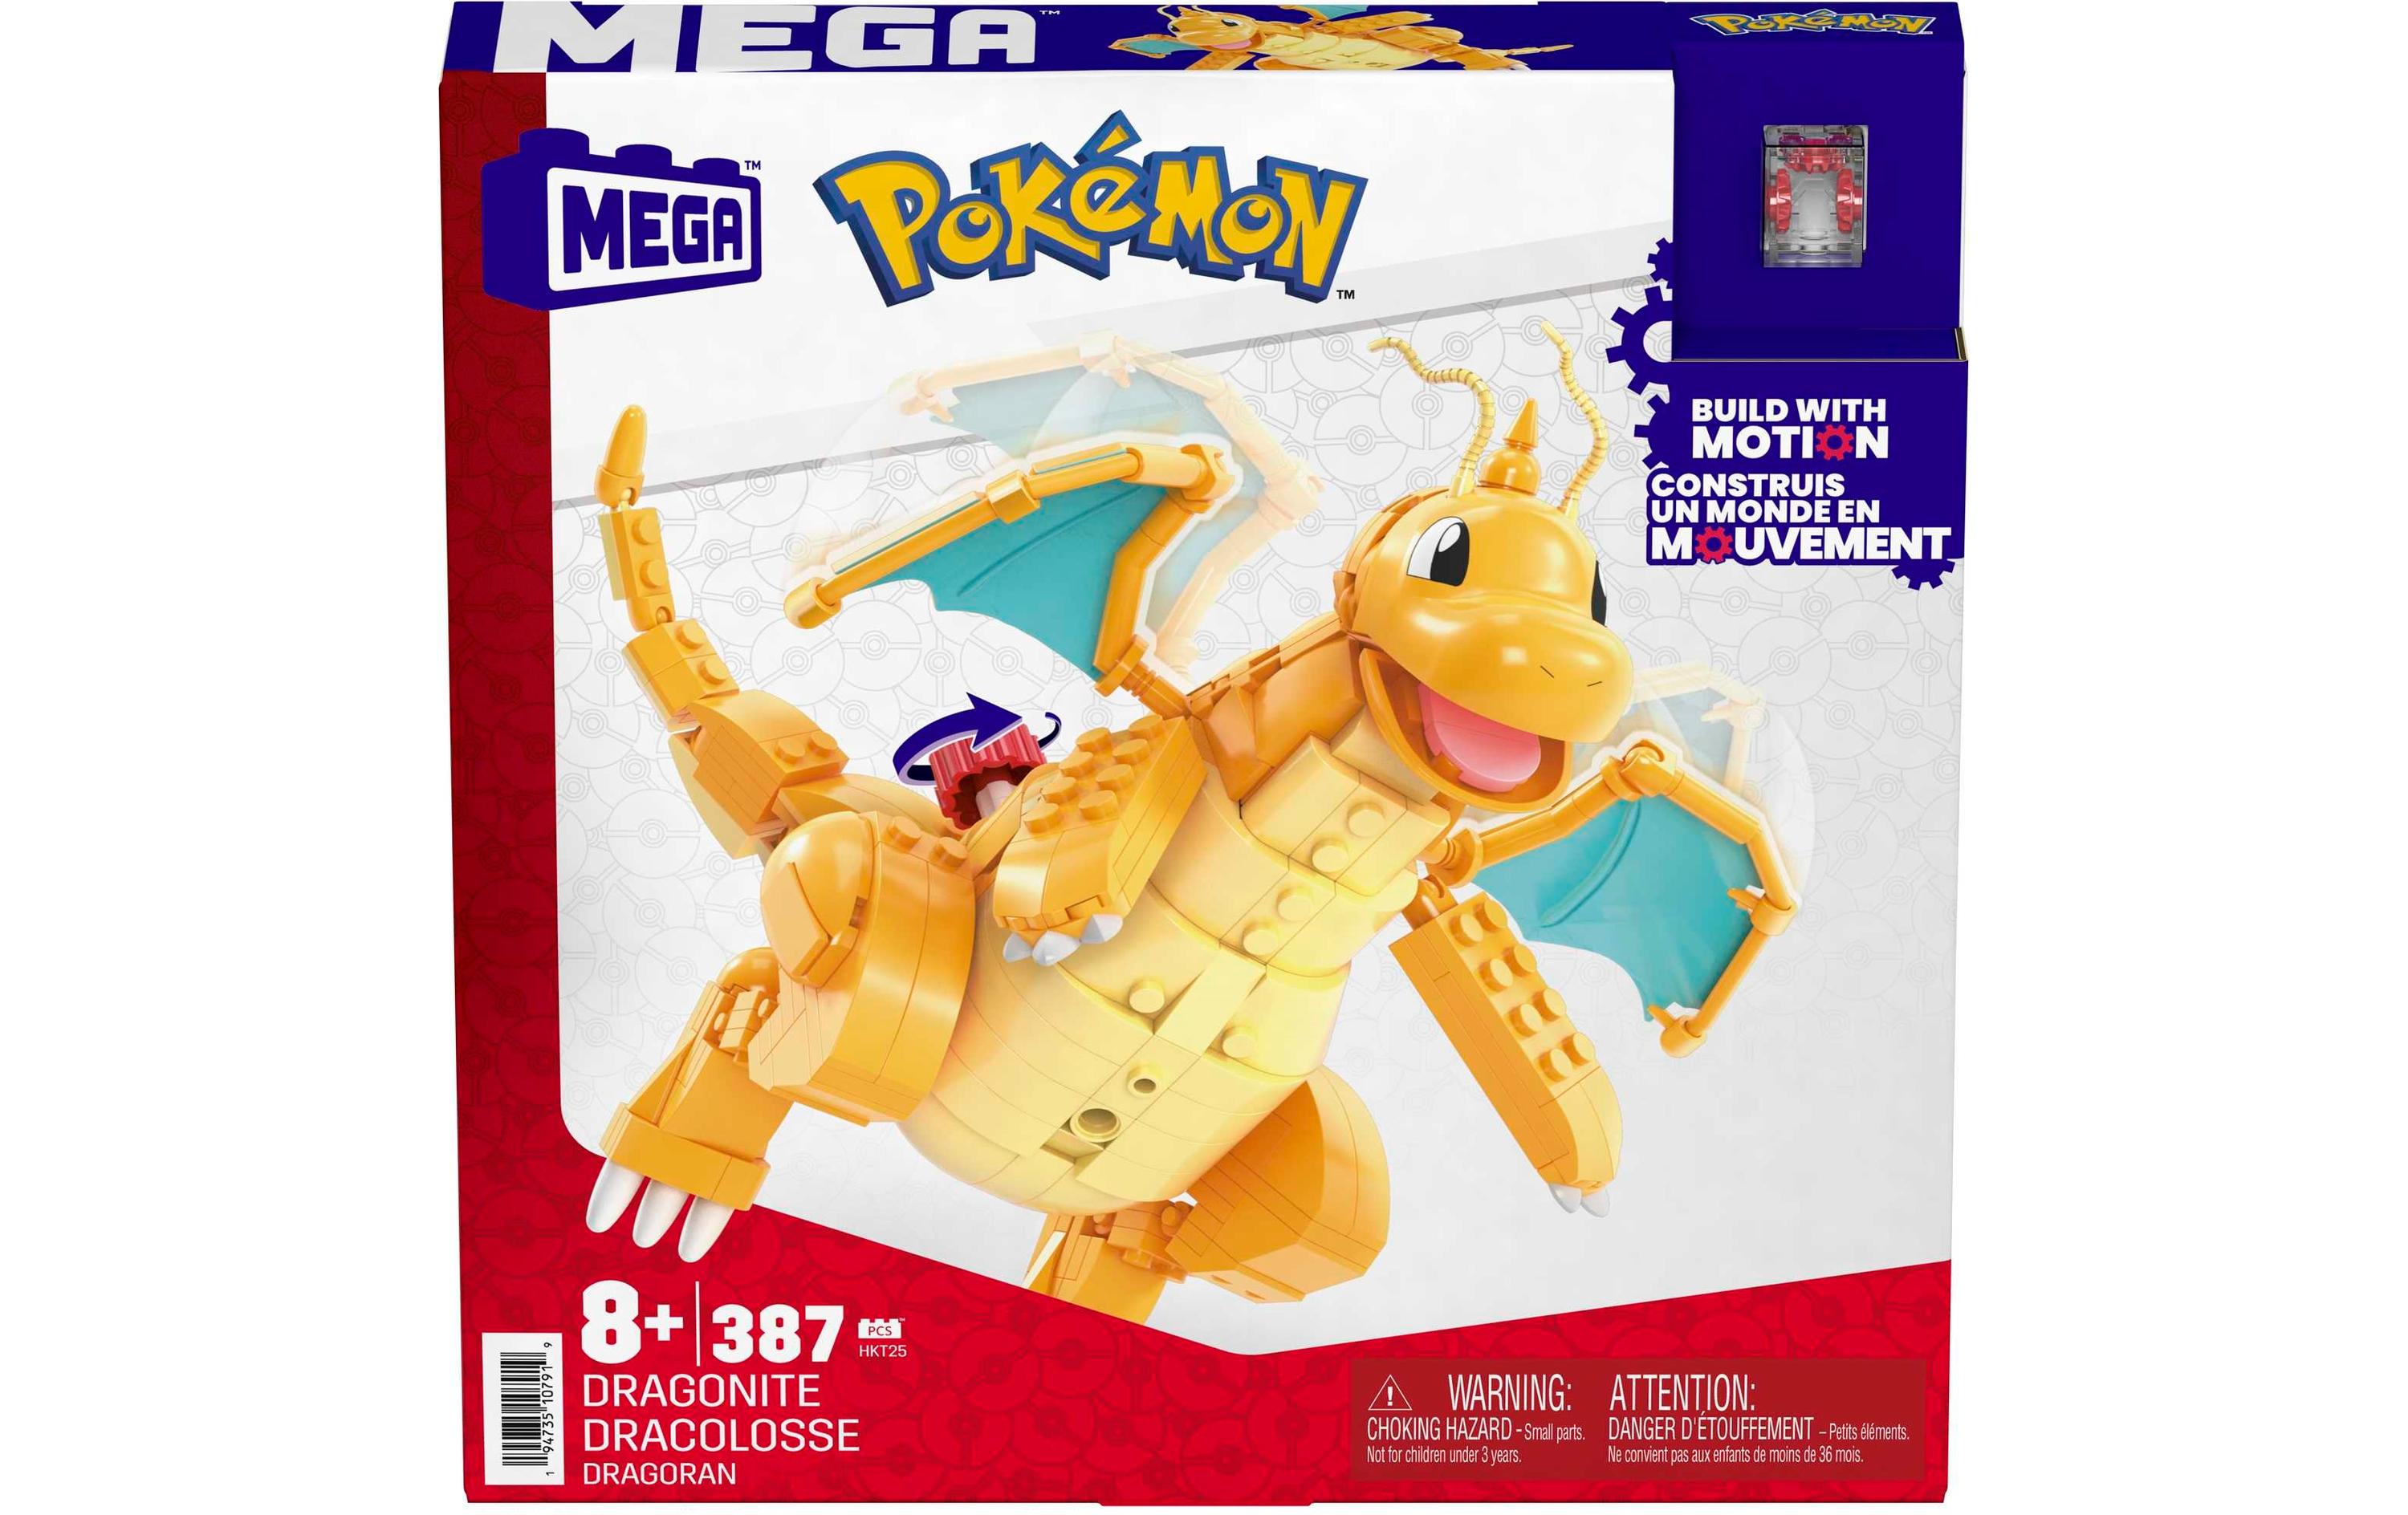 Mega Construx Pokémon Dragonite